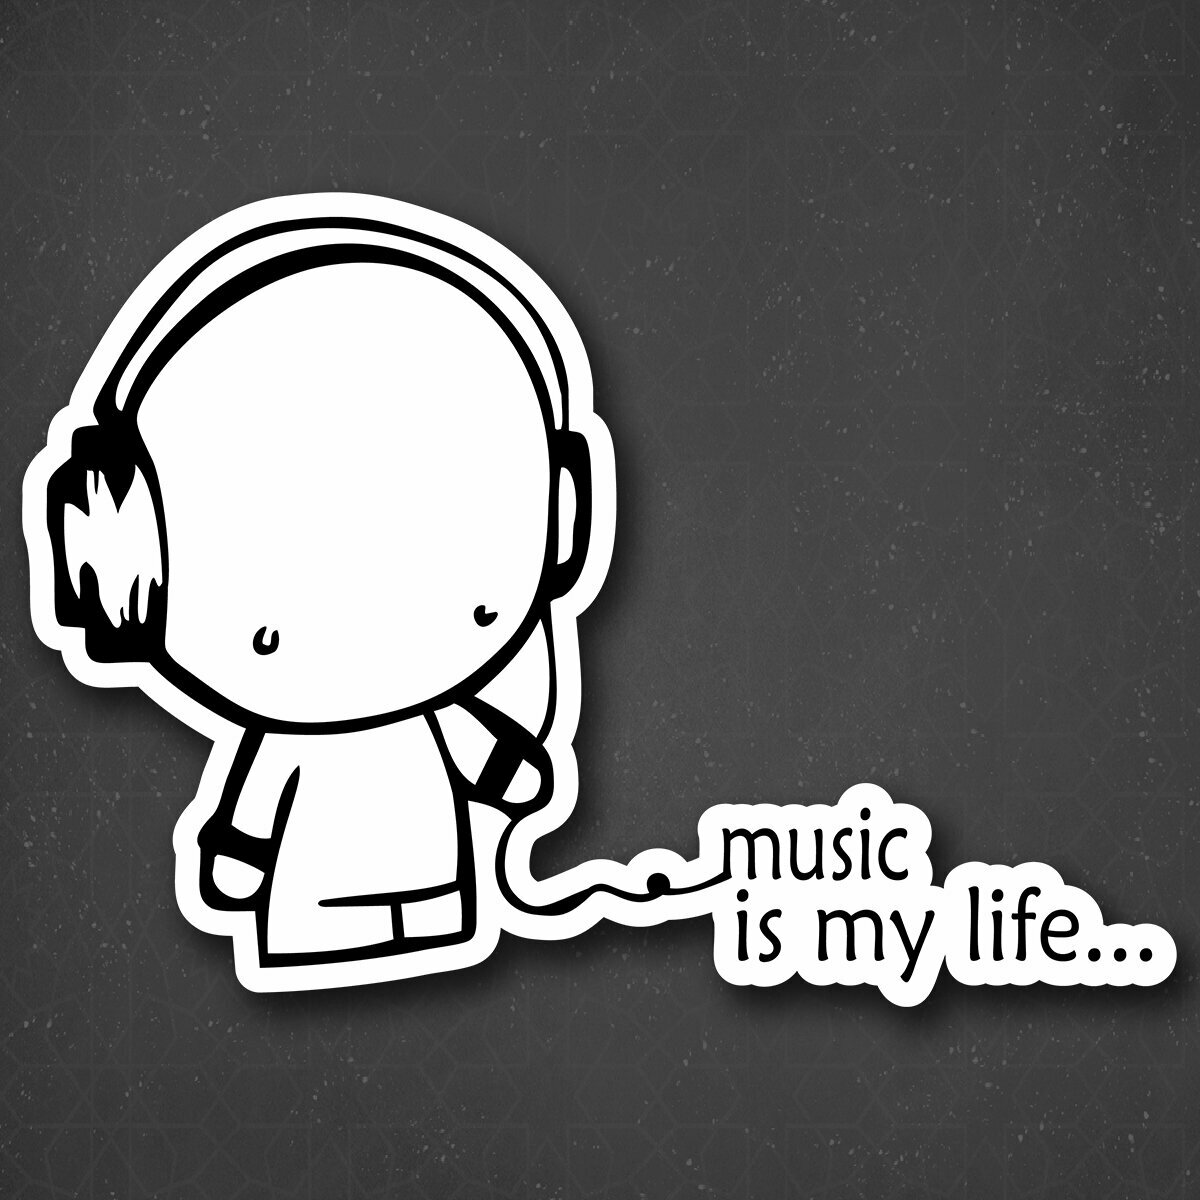 Наклейка на авто "Music is my life - Музыка моей жизни" 24x16 см